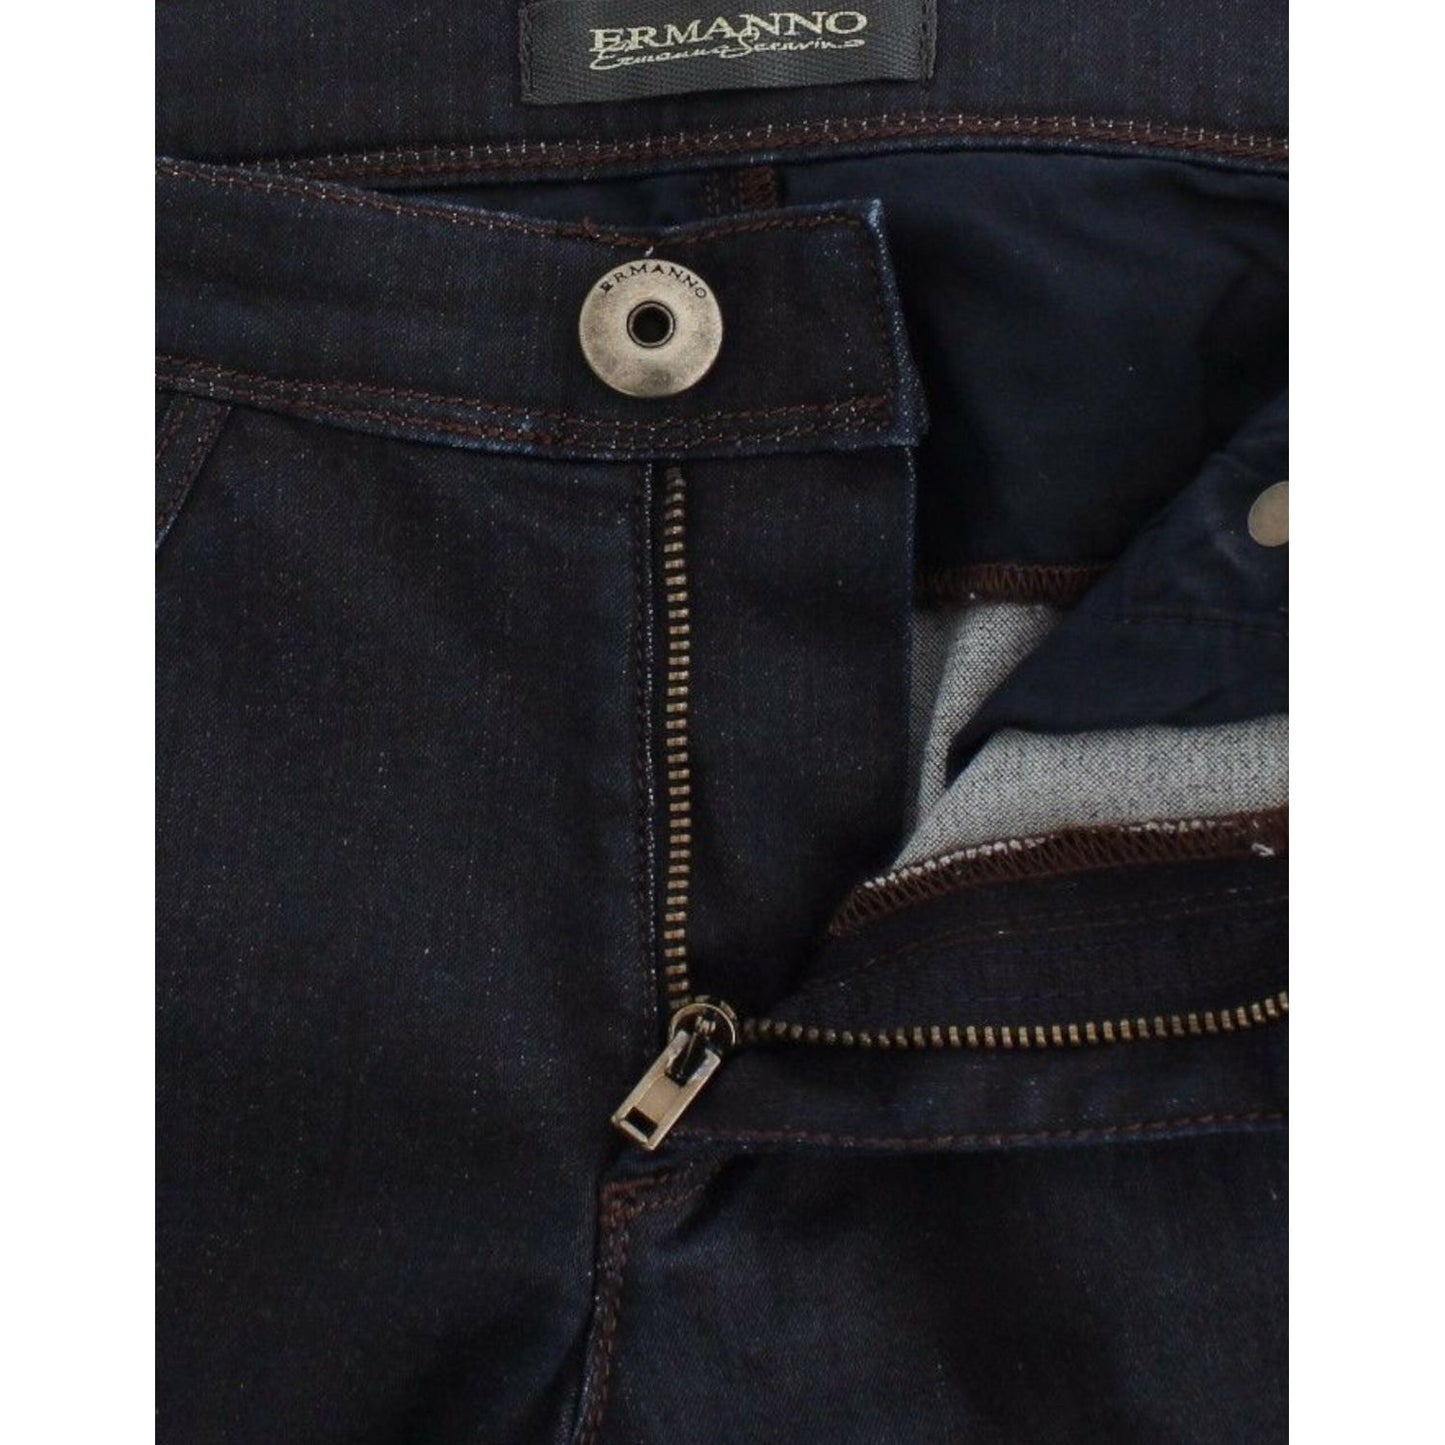 Ermanno Scervino Chic Dark Blue Slim Jeans for Elegant Style blue-slim-jeans-denim-pants-skinny-leg-stretch